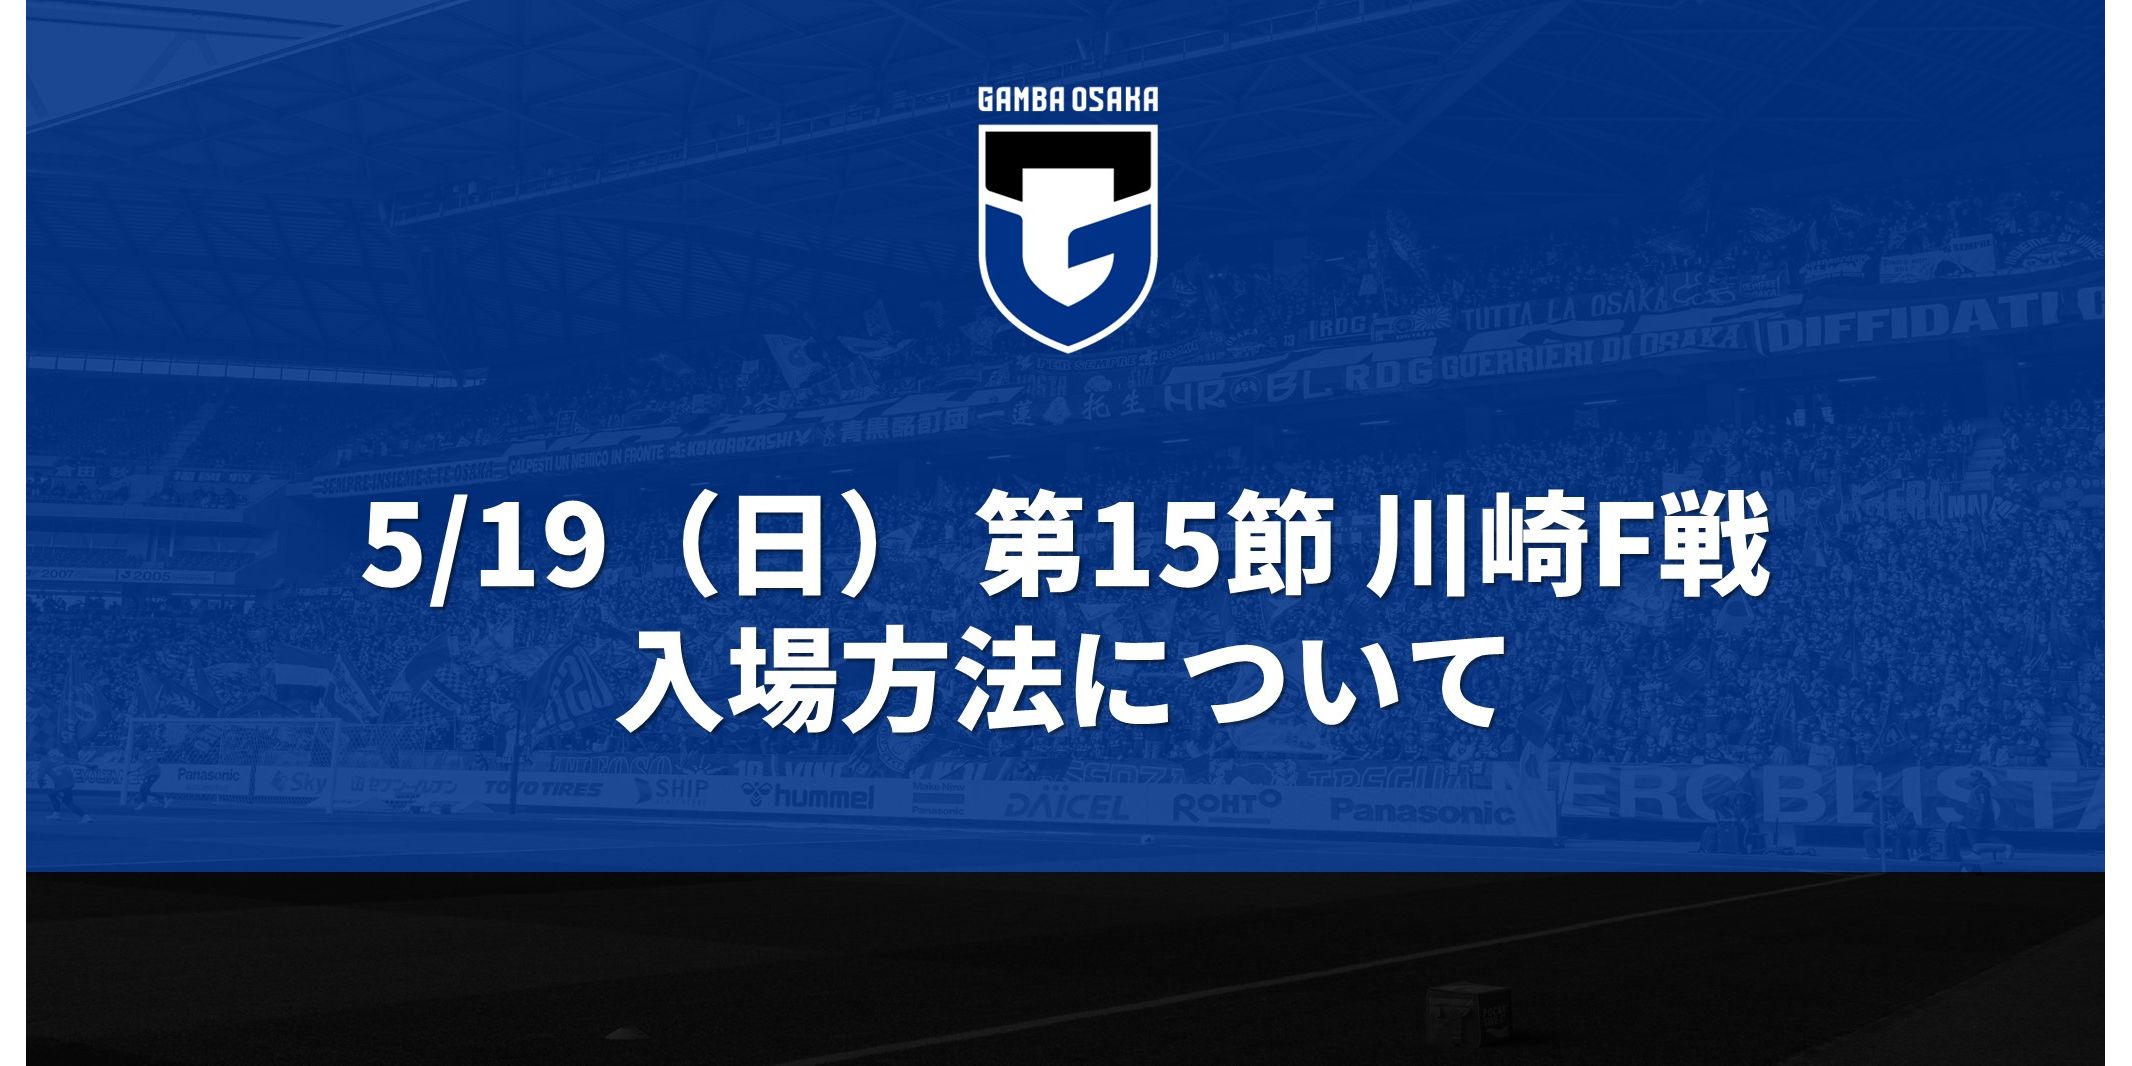 5/19 (Sunday) Meiji Yasuda J1 Round 15 Kawasaki F match How to enter | Gamba Osaka official site